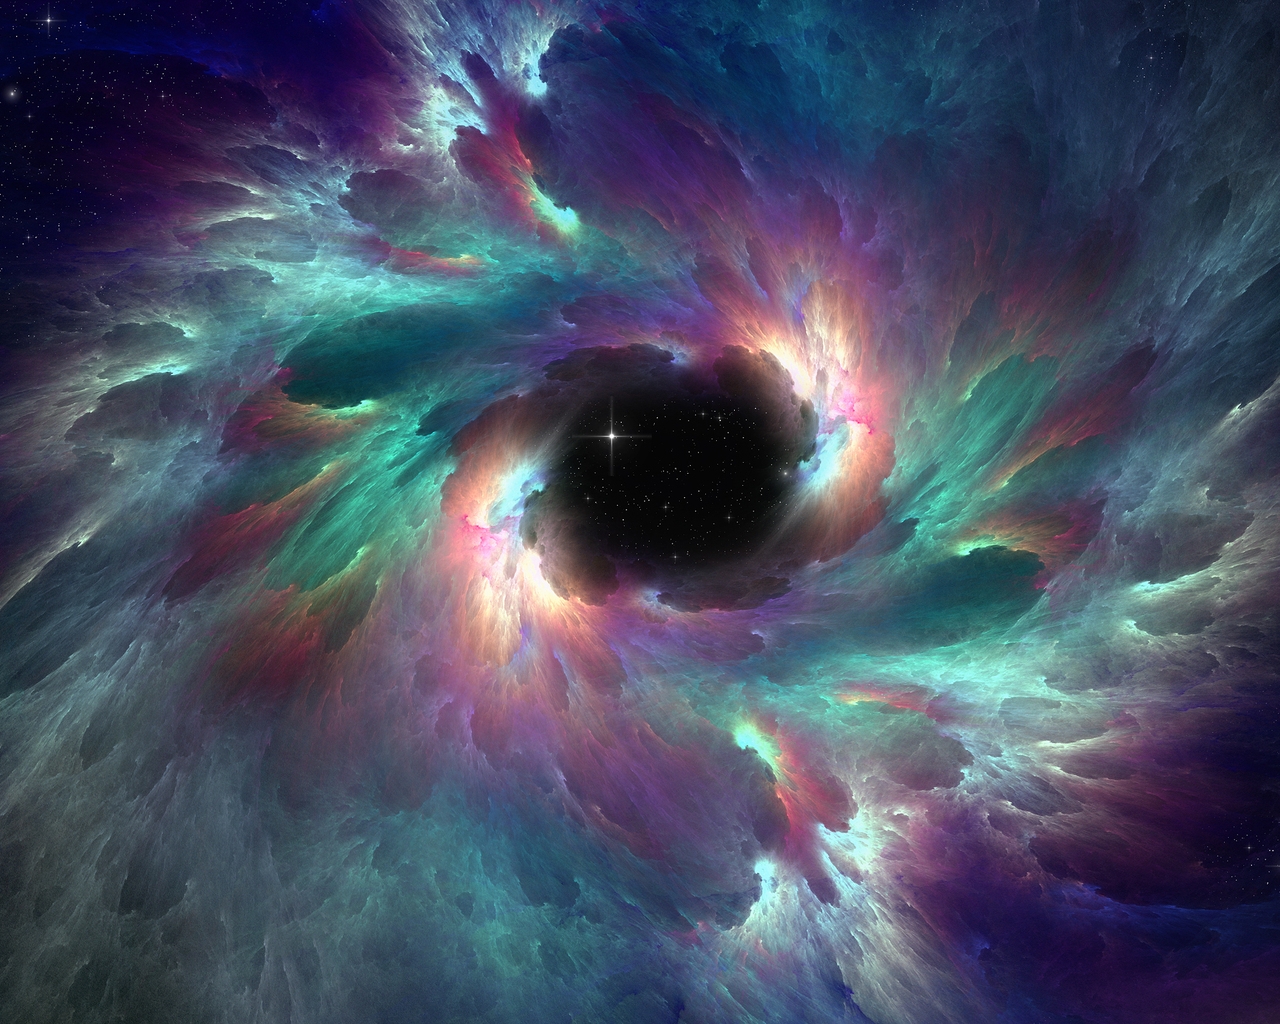 The Iridescent Nebula for 1280 x 1024 resolution